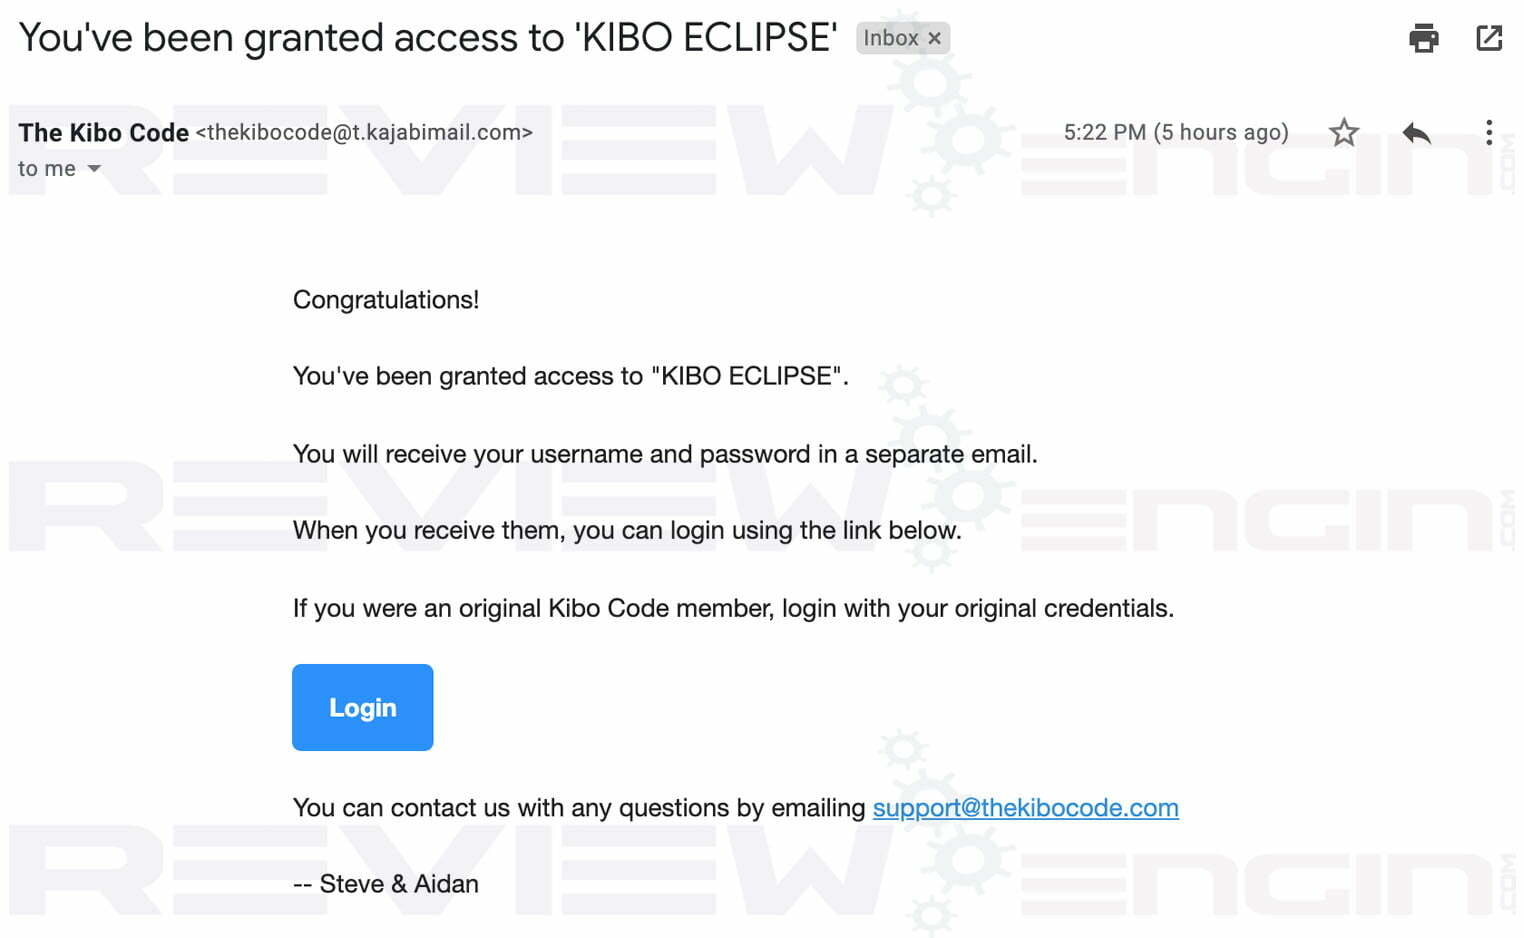 Kibo Eclipse Membership